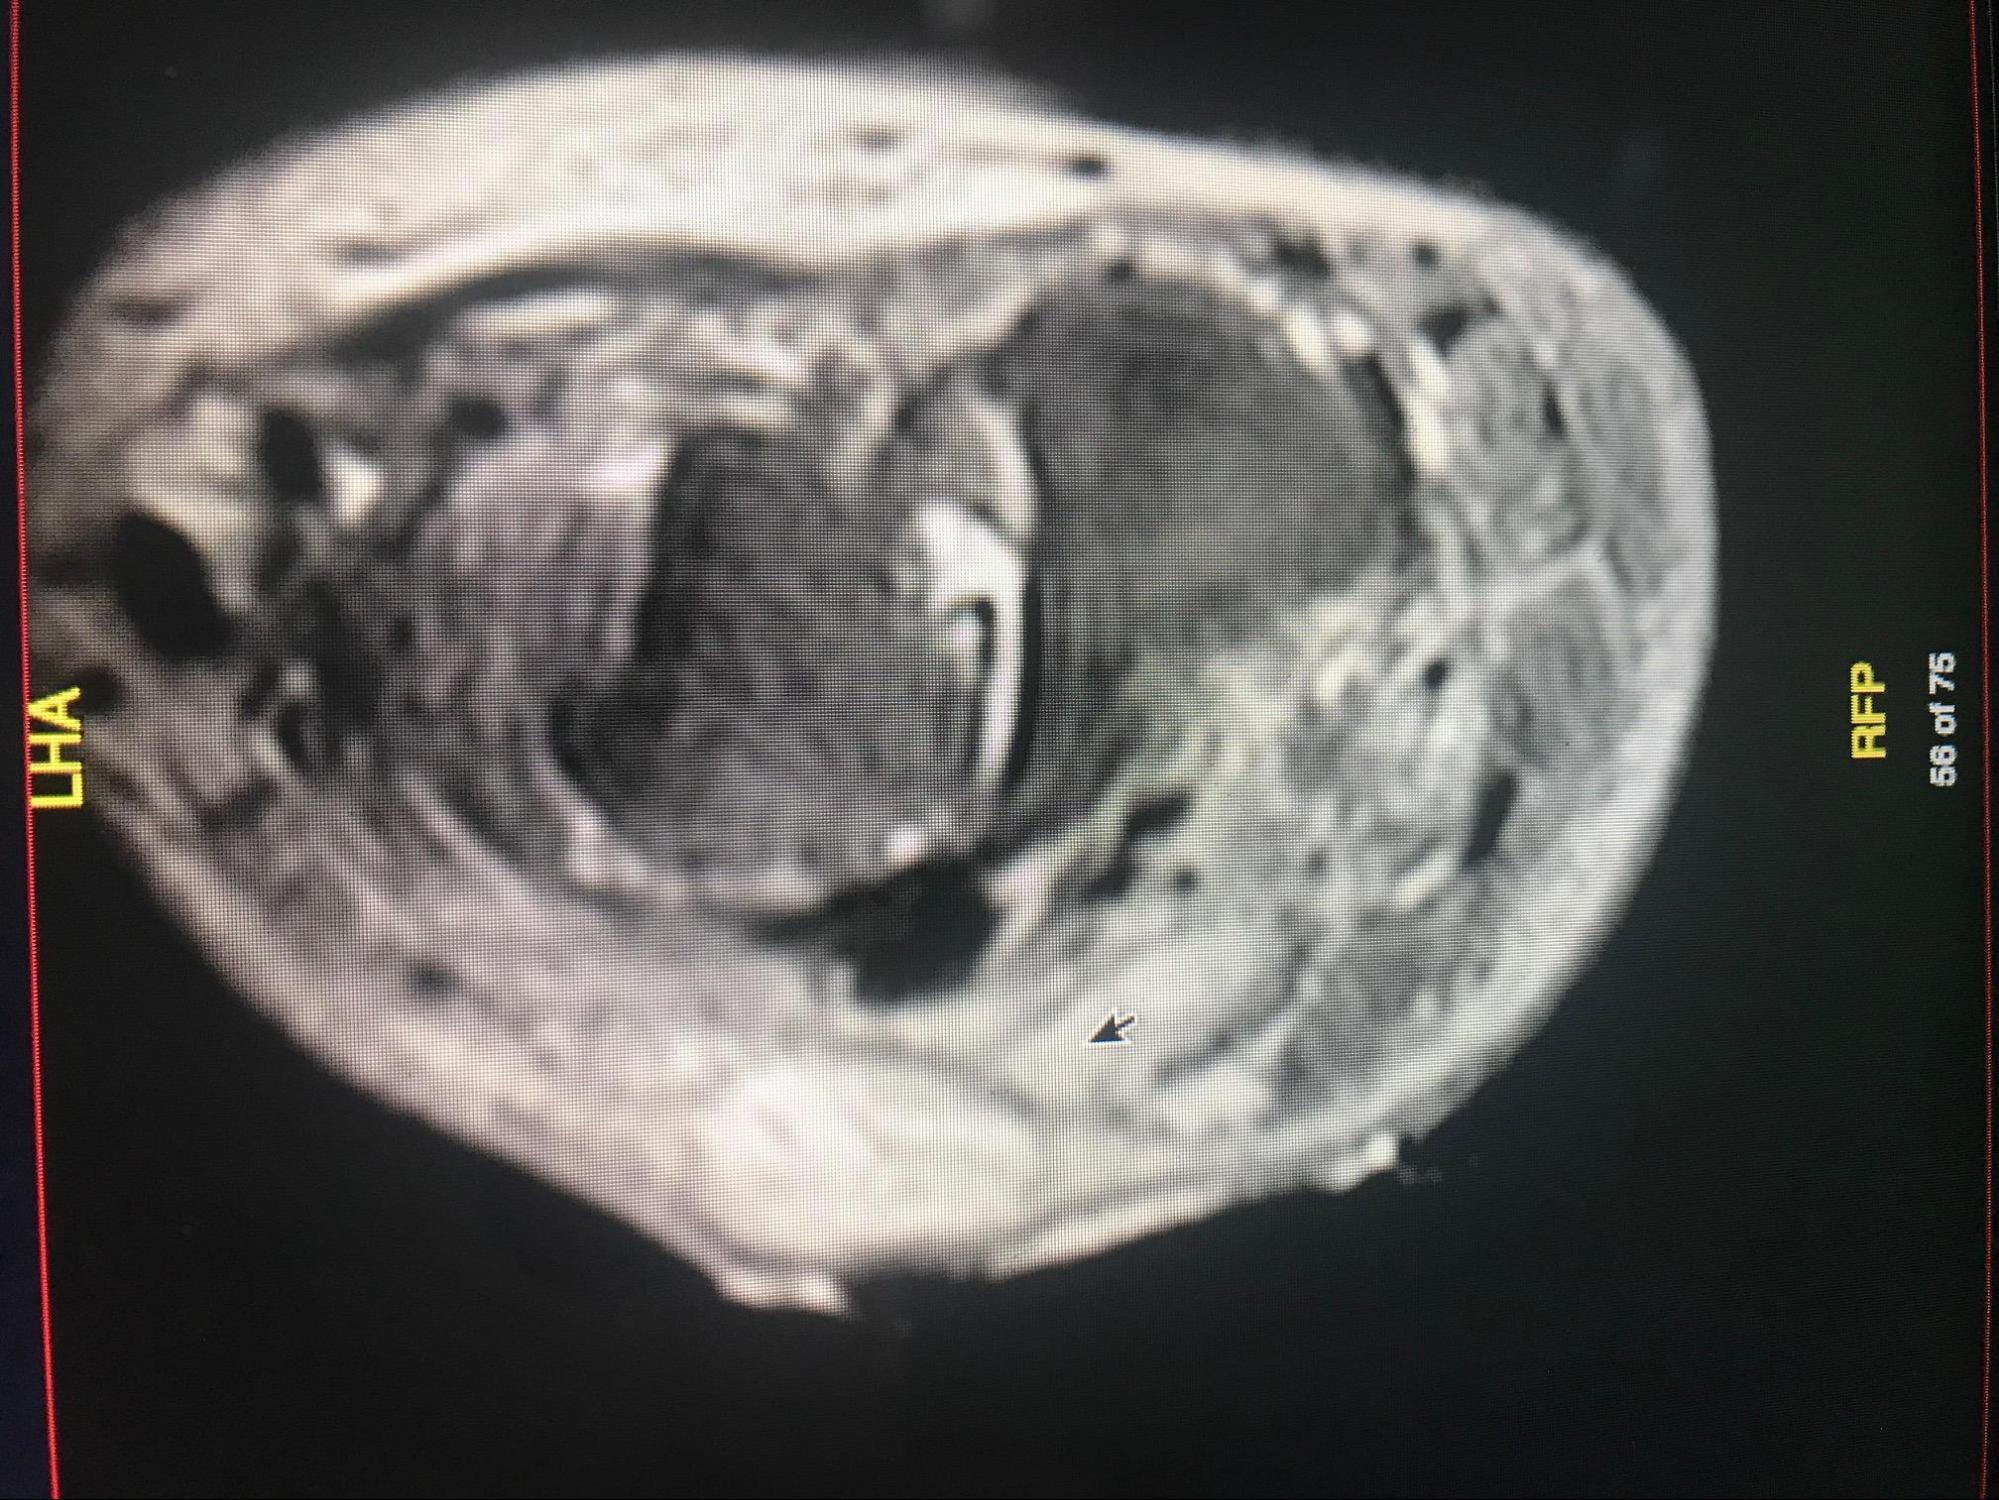 Osteomyelitis
CT Scan of chronic osteomyelitis of the leg demonstrating classic cloaca, sequestrum, and involucrum 